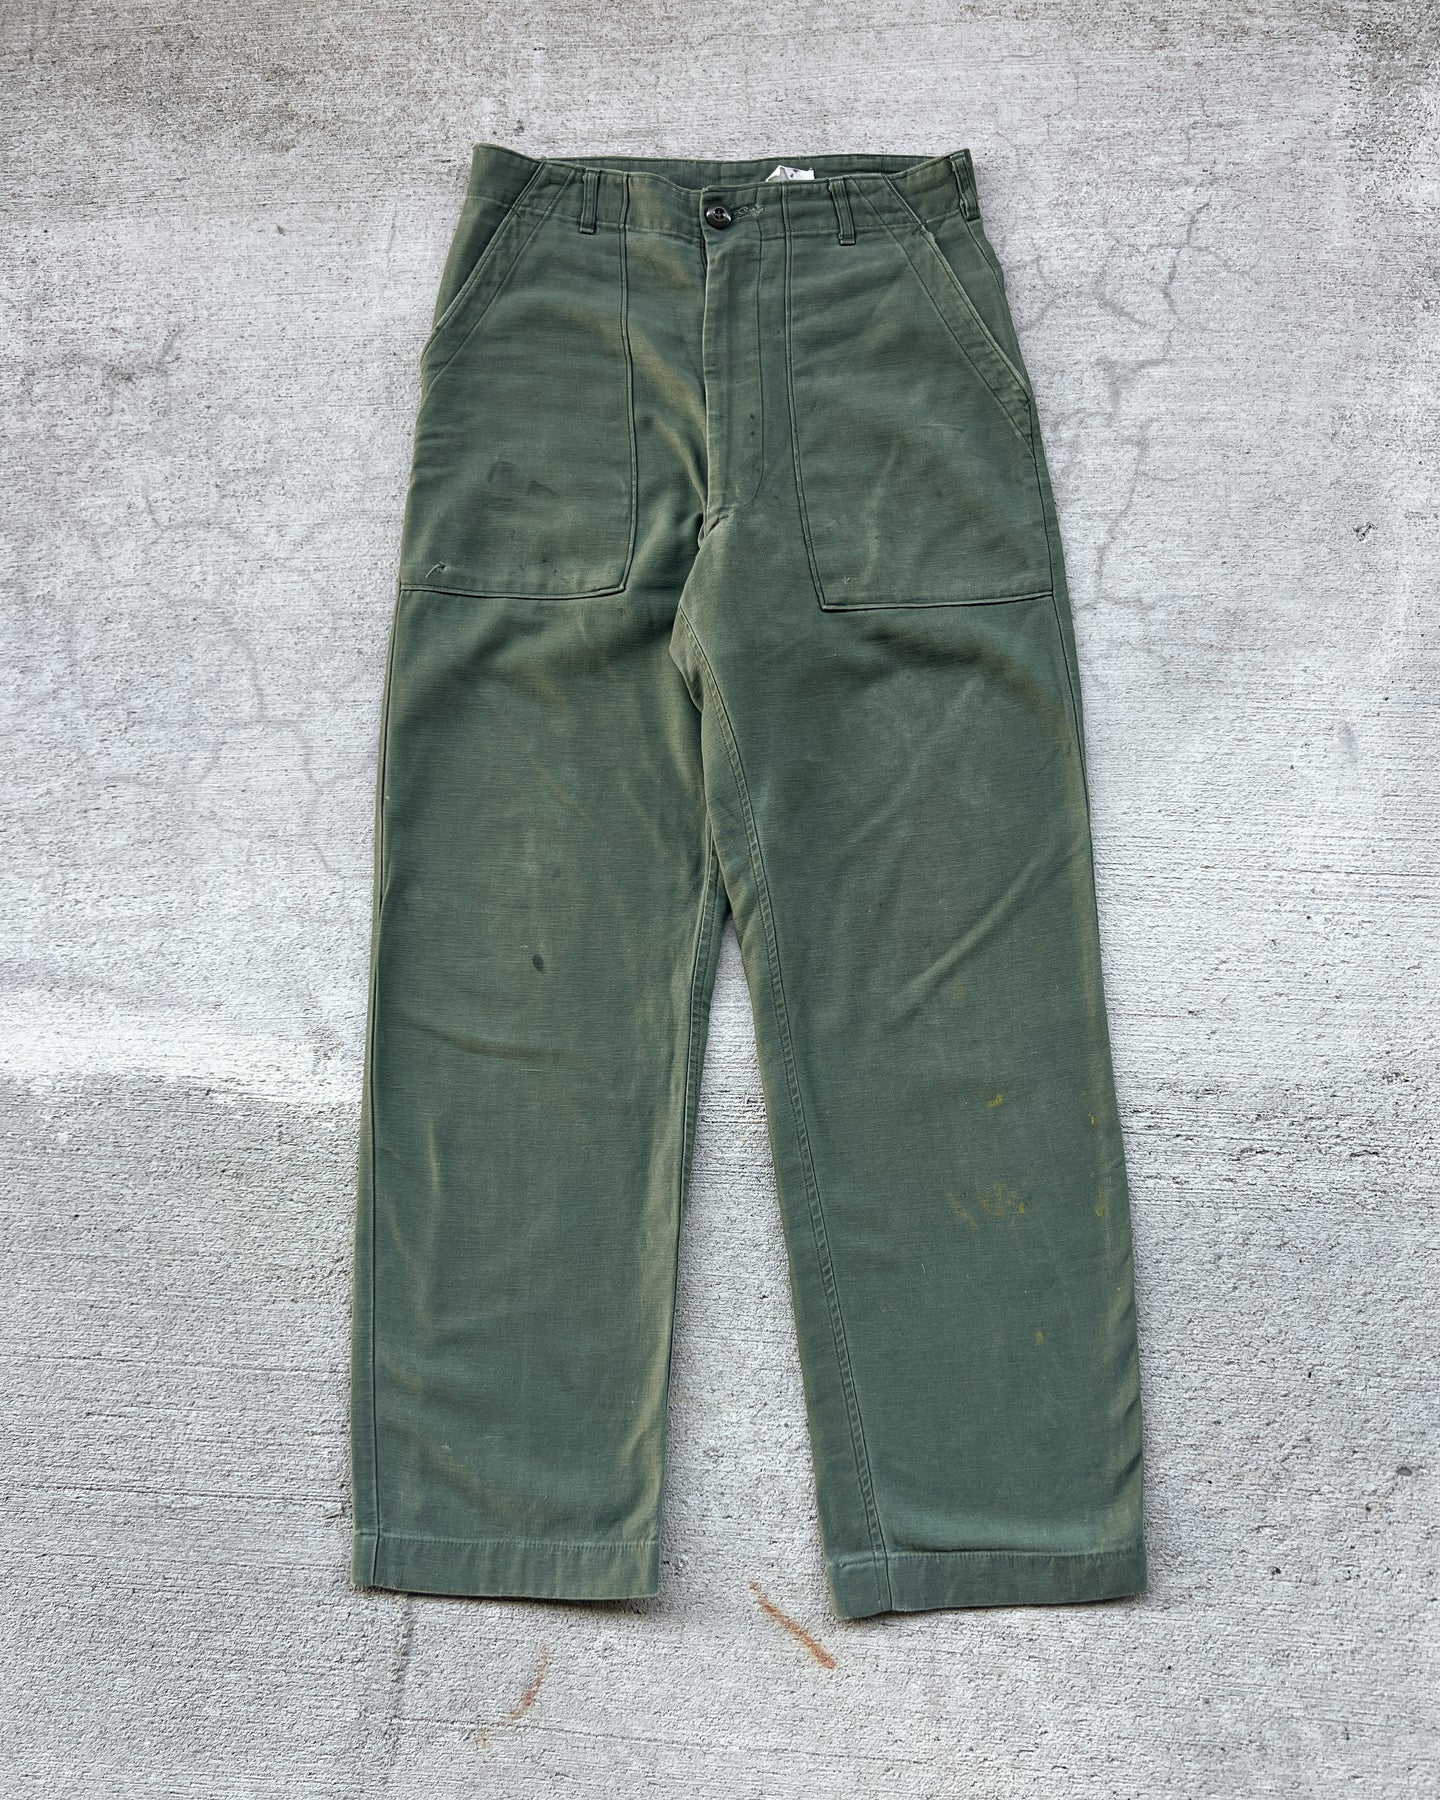 1970s OG-107 Fatigue Pants - Size 29 x 29